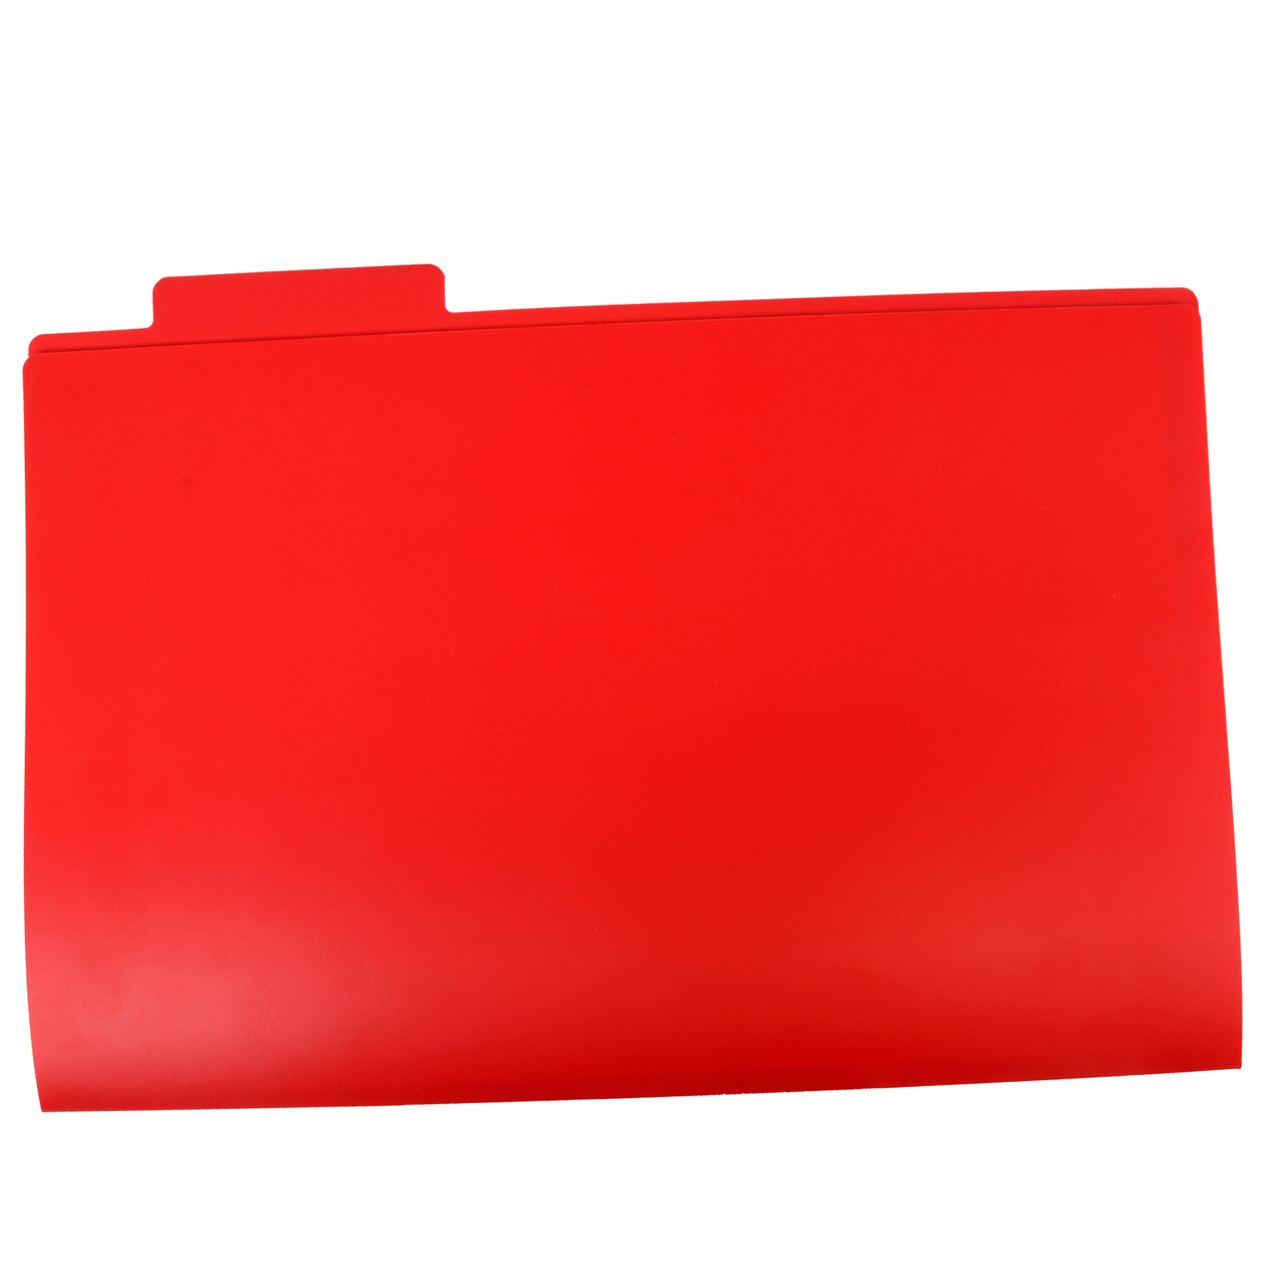 11x17 Polyfite Filing Folder (9 per Package)( Red )